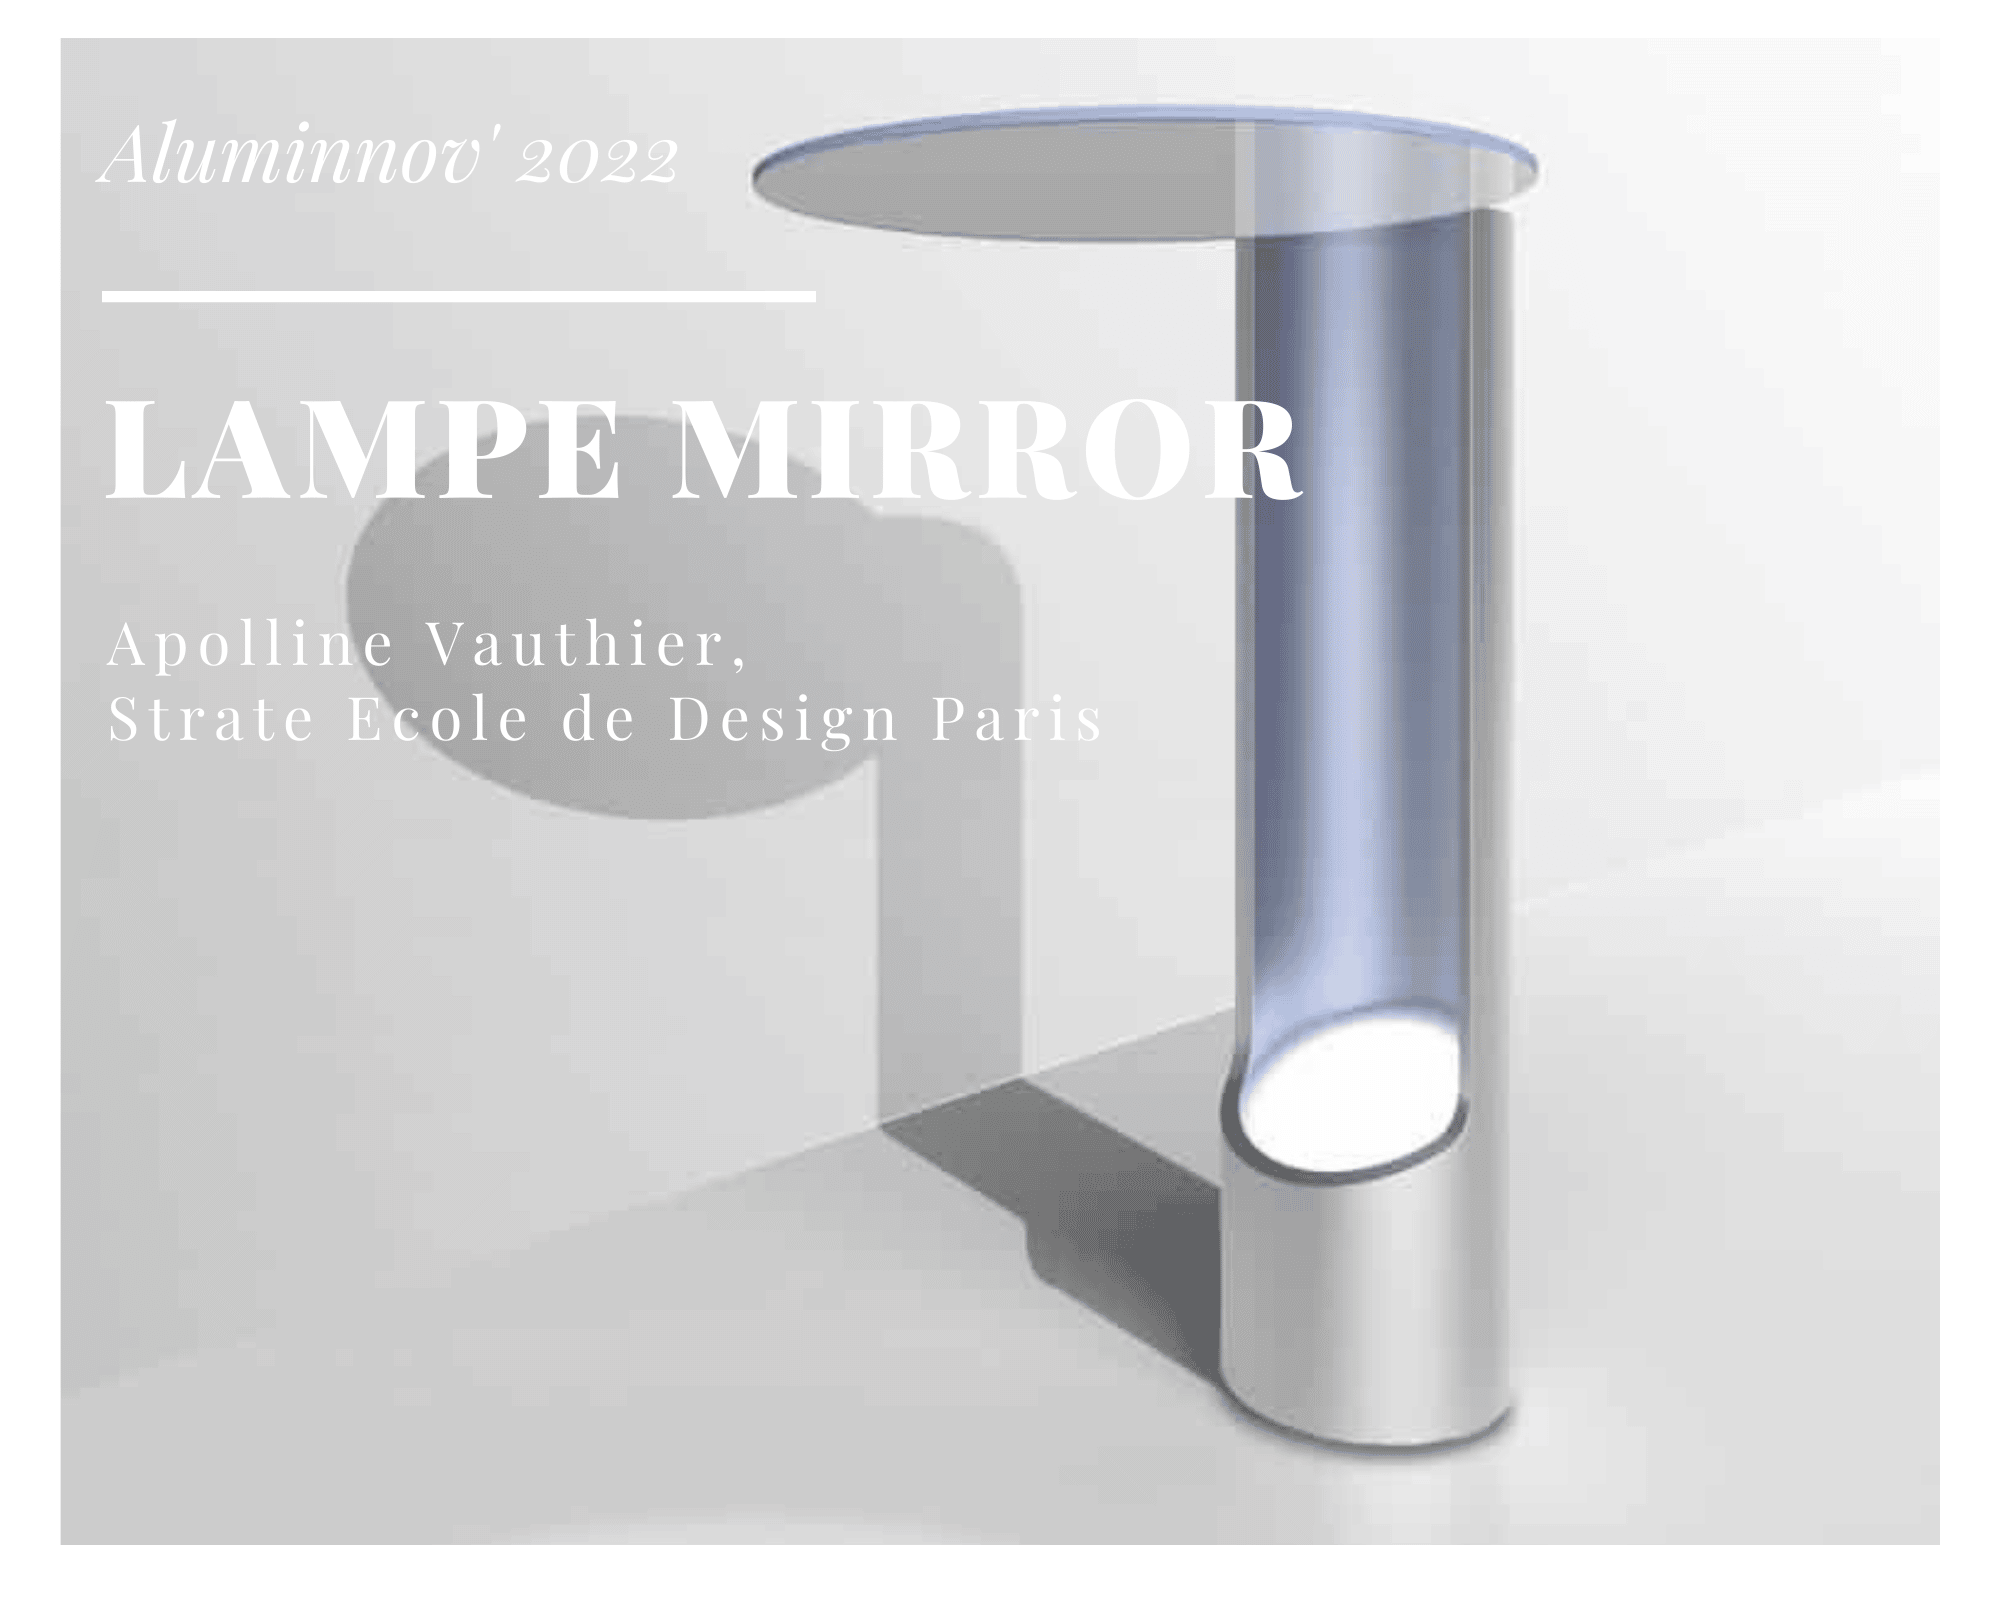 Lampe Mirror